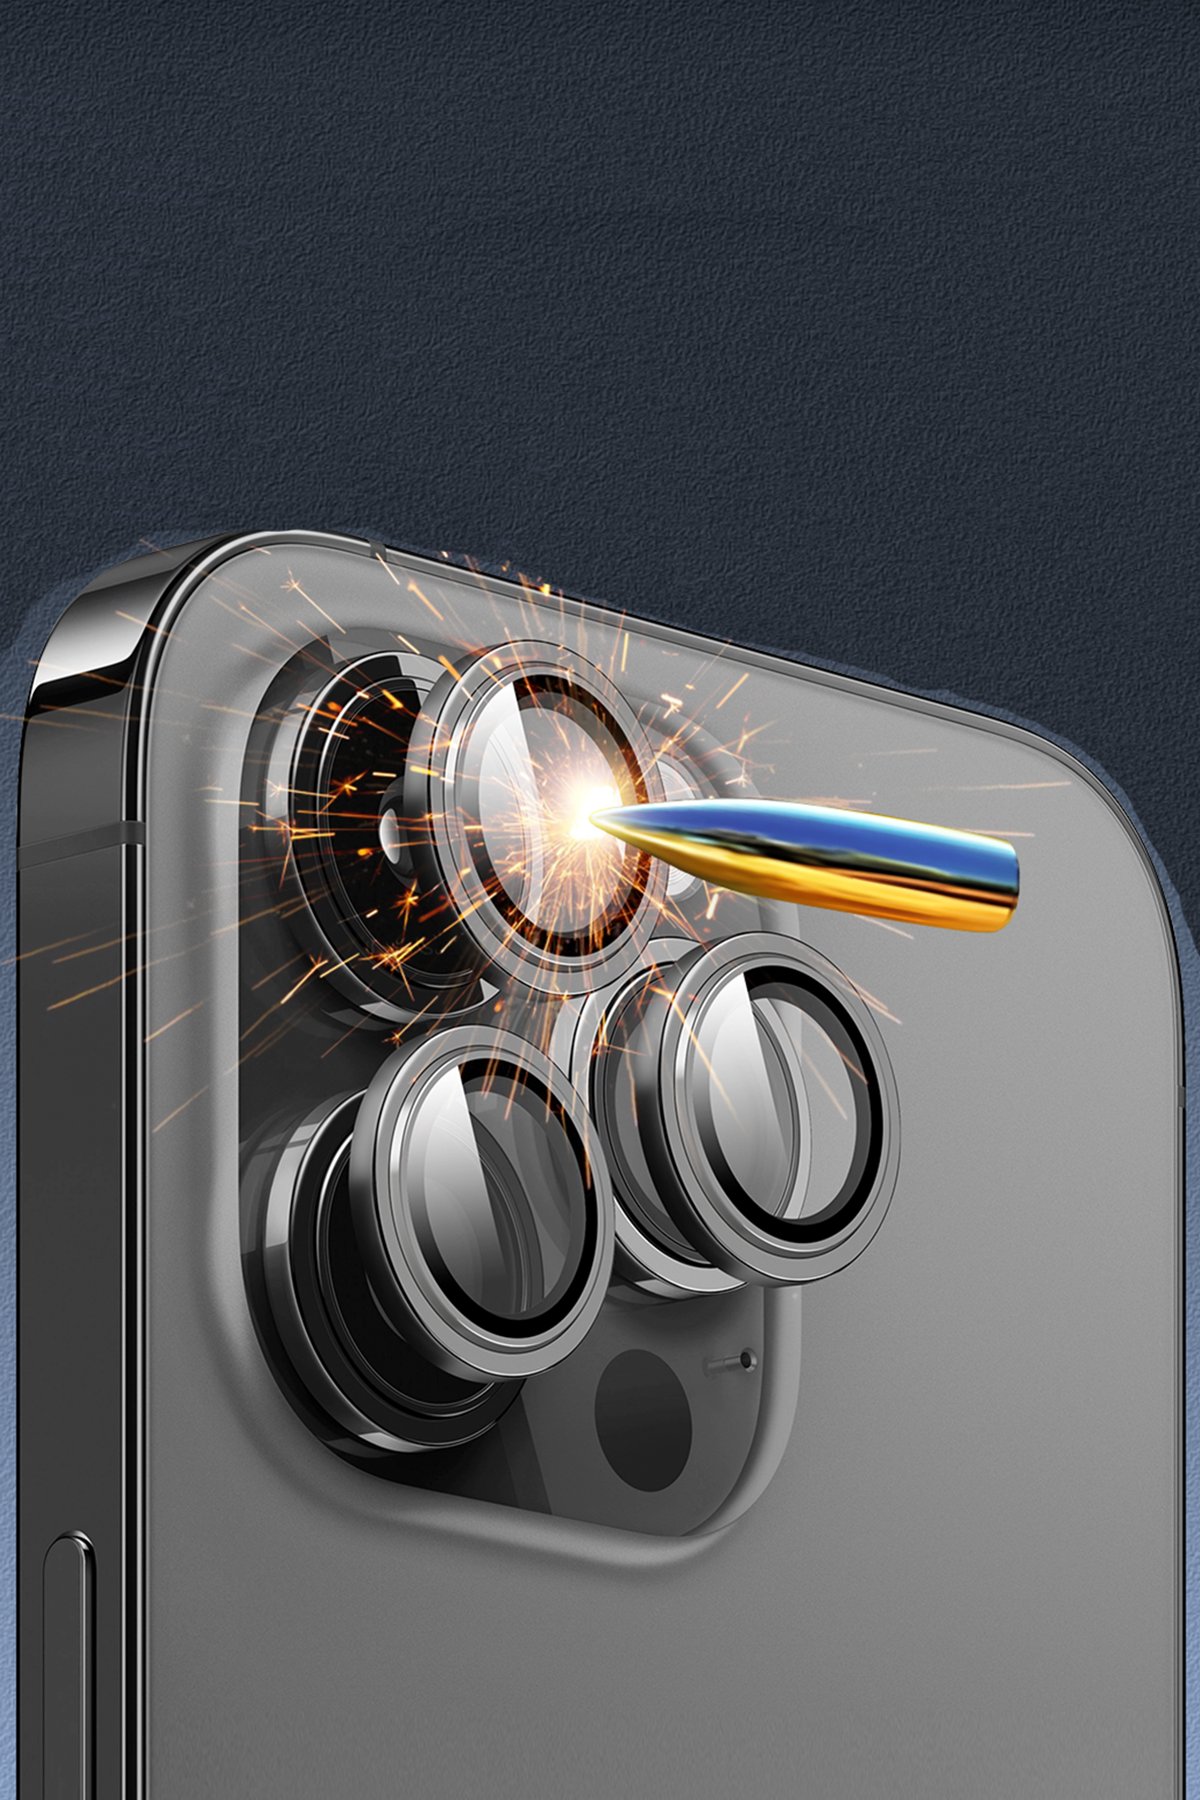 URR iPhone 14 Pro 3D PVD Dioxide Kamera Lens Koruyucu - Siyah